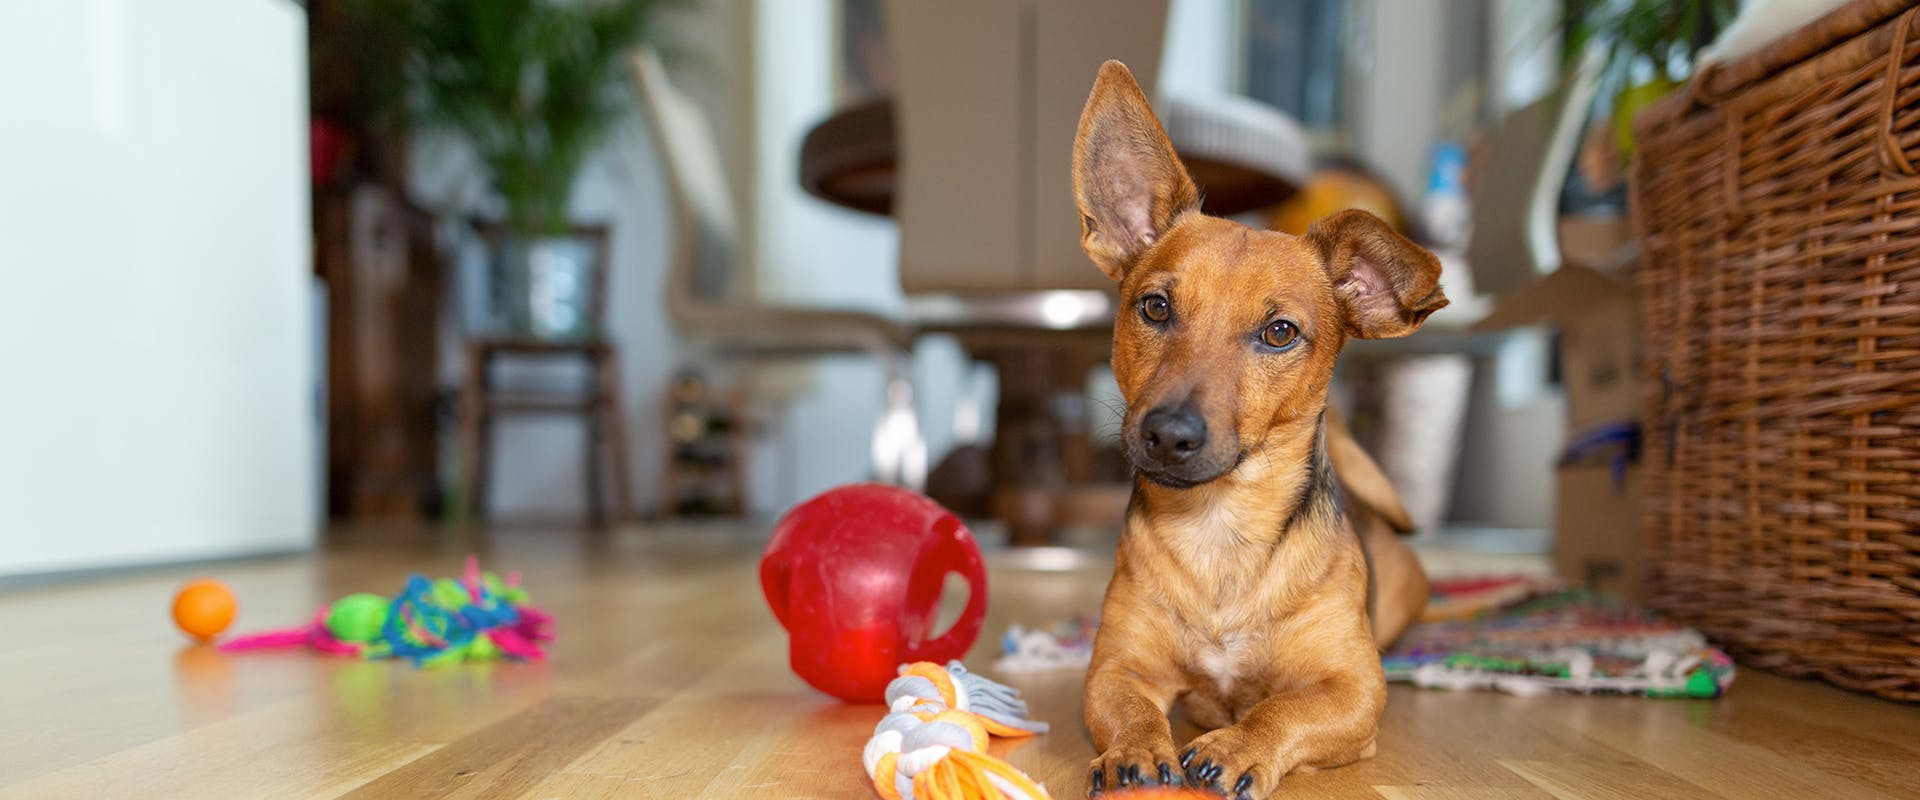 Pet Supplies : PETGEEK Automatic Treat Dispensing Dog Toys, Dog